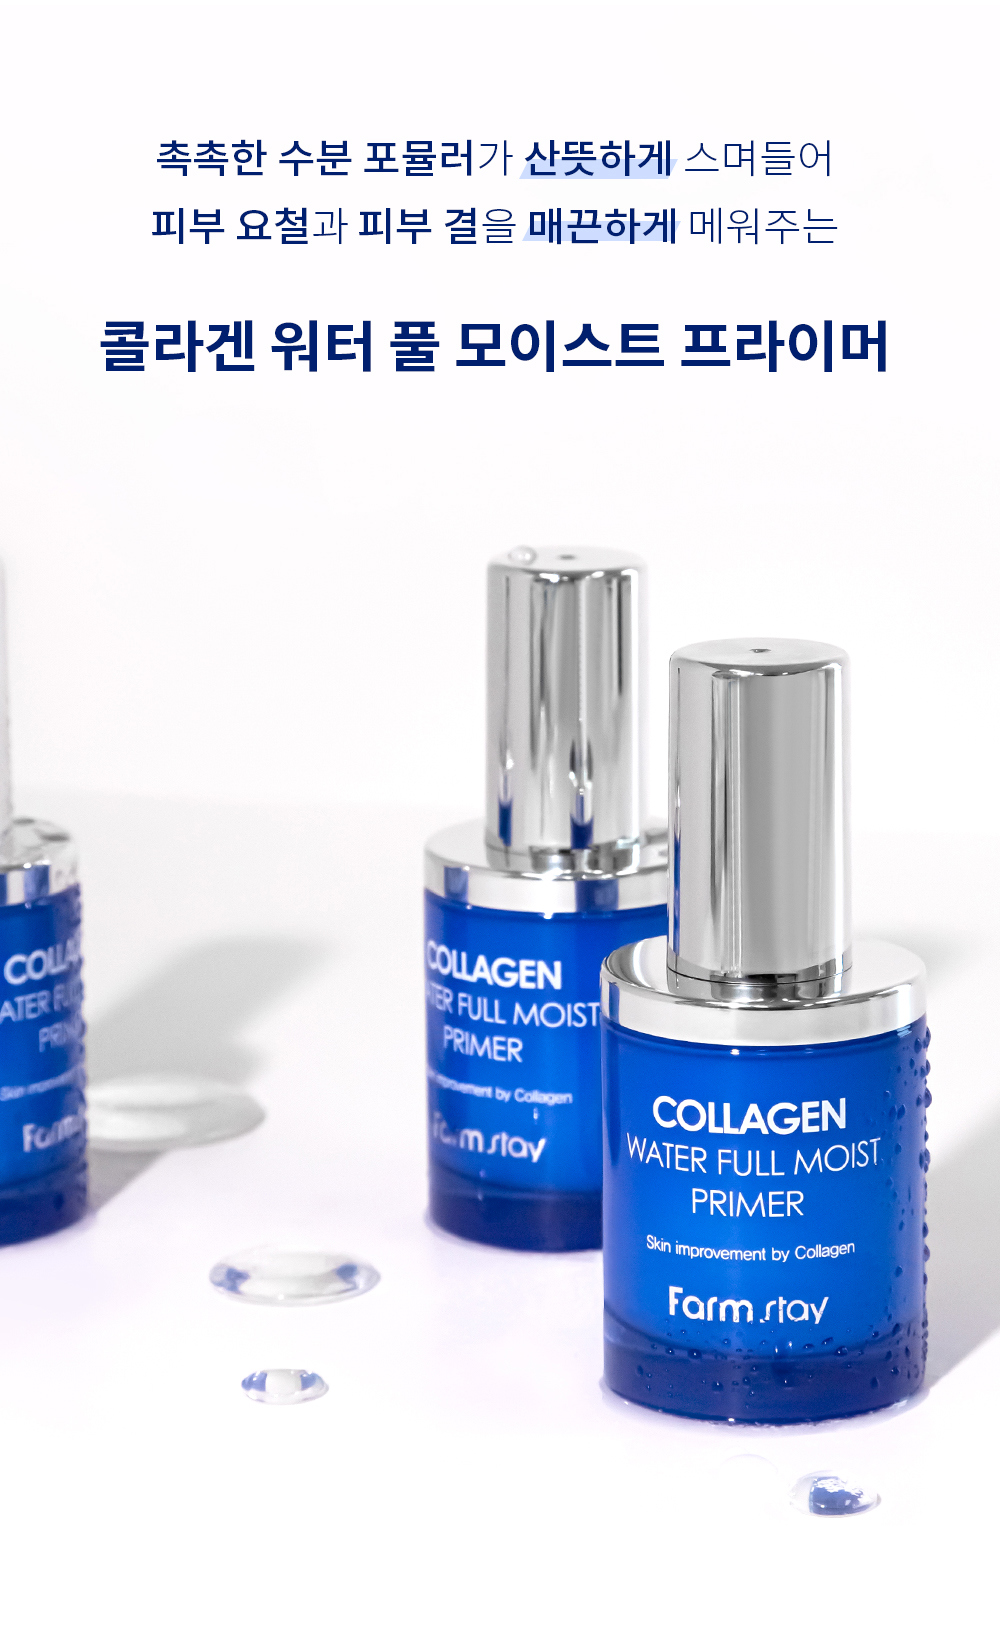 cosmetics product image-S1L3